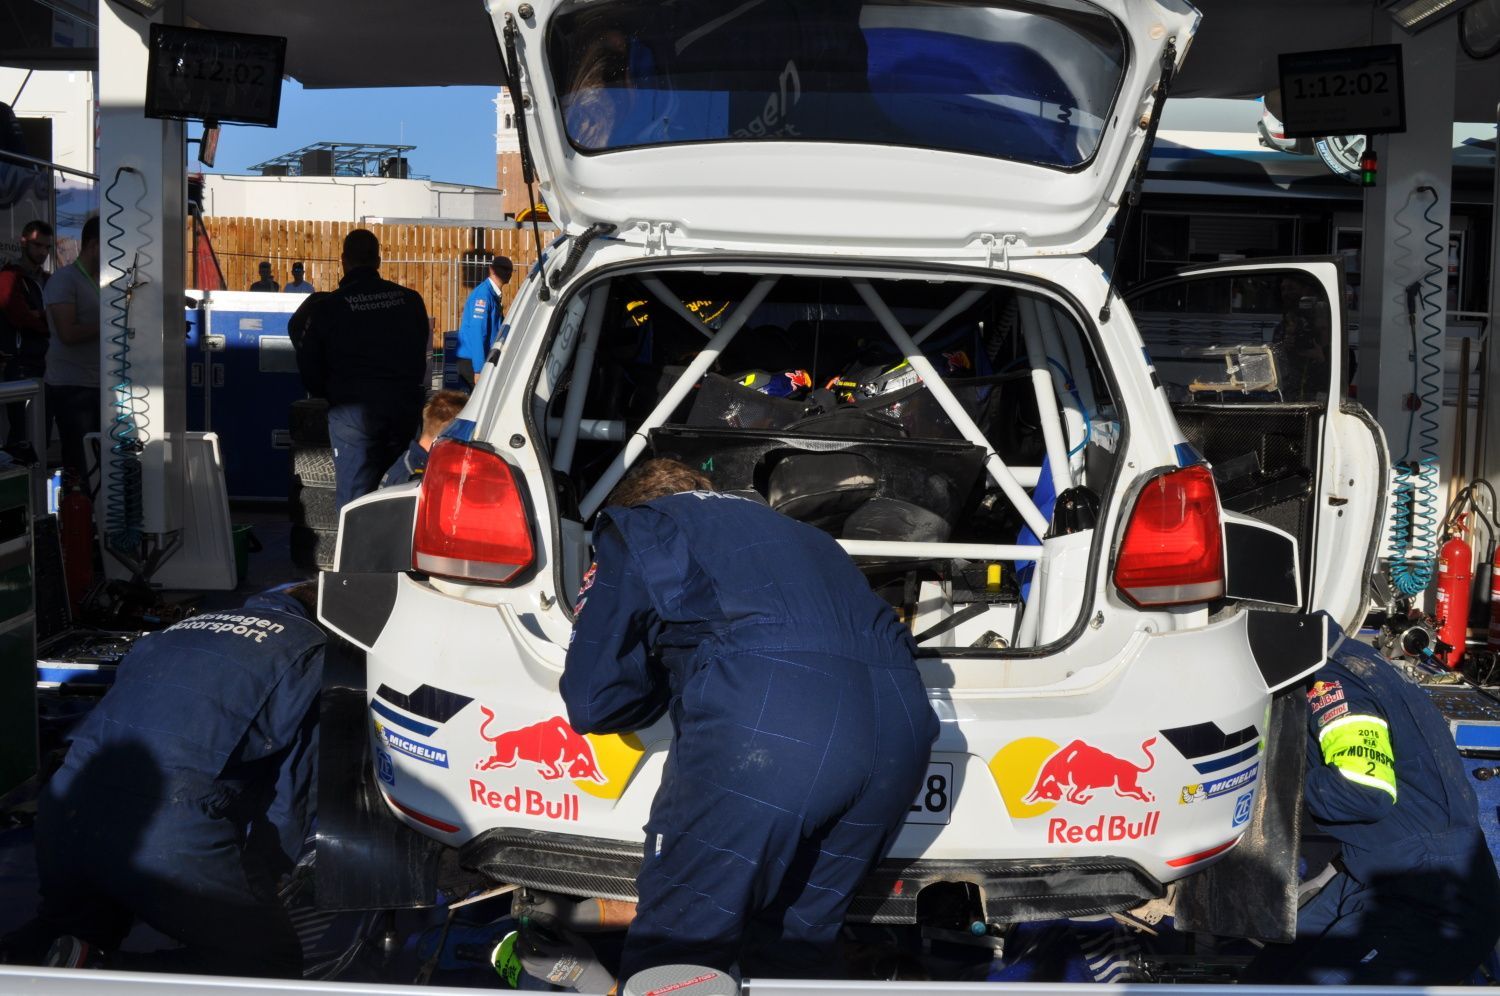 Katalánská rallye 2016: VW Polo R WRC v boxech